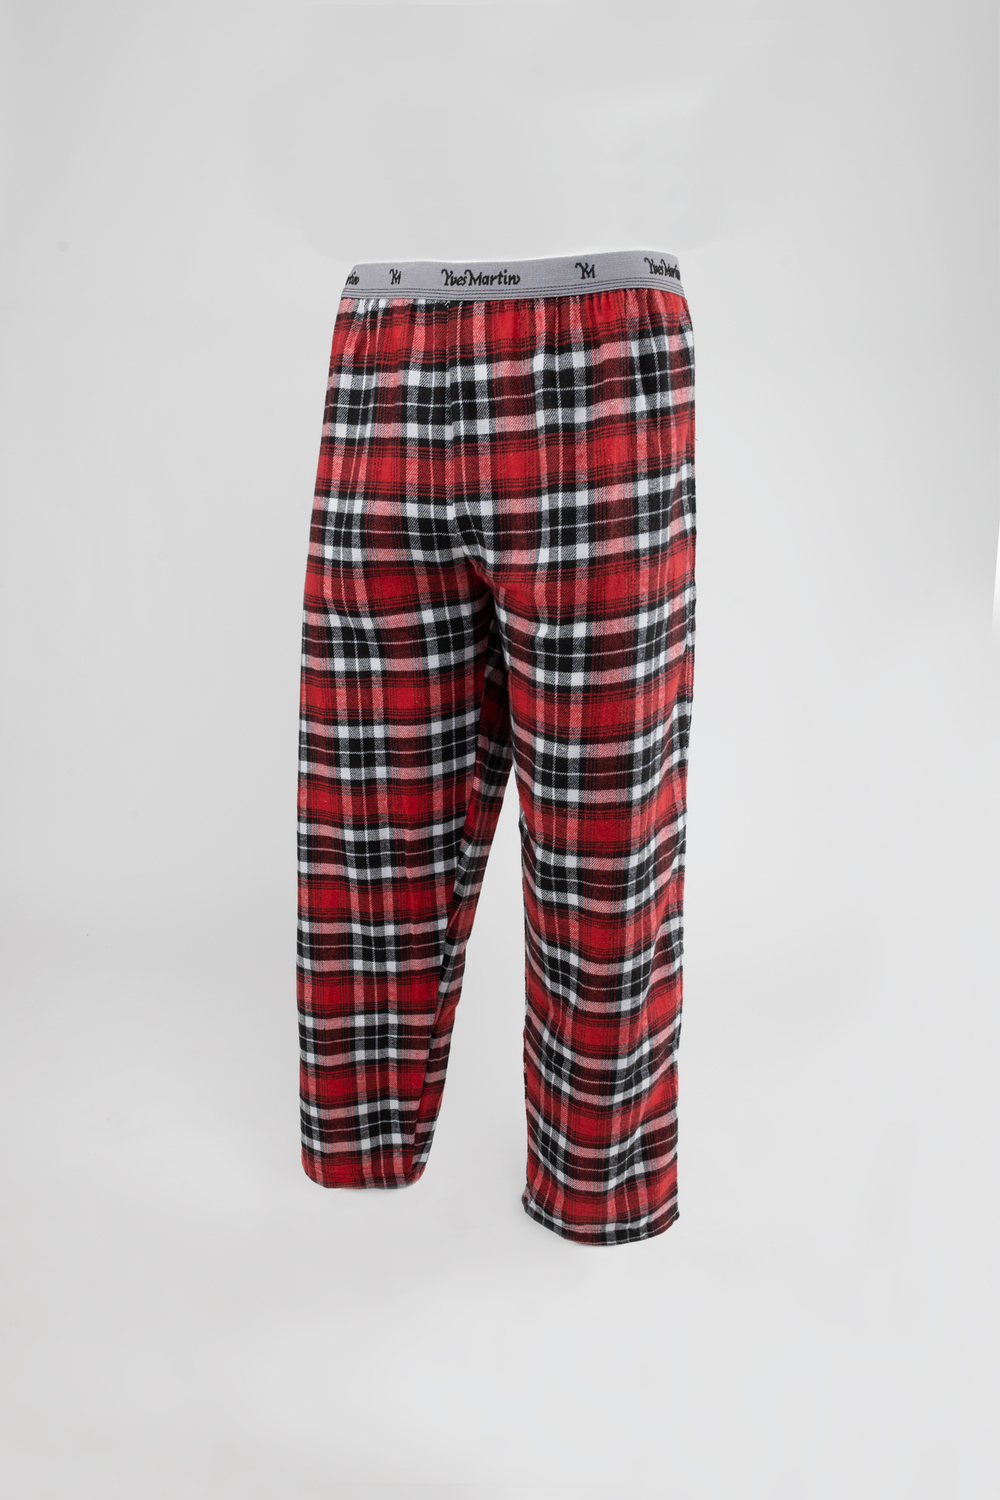 Vislivin Women's Stretch Knit Pajama Pants Modal Sleep Pant – vislivin